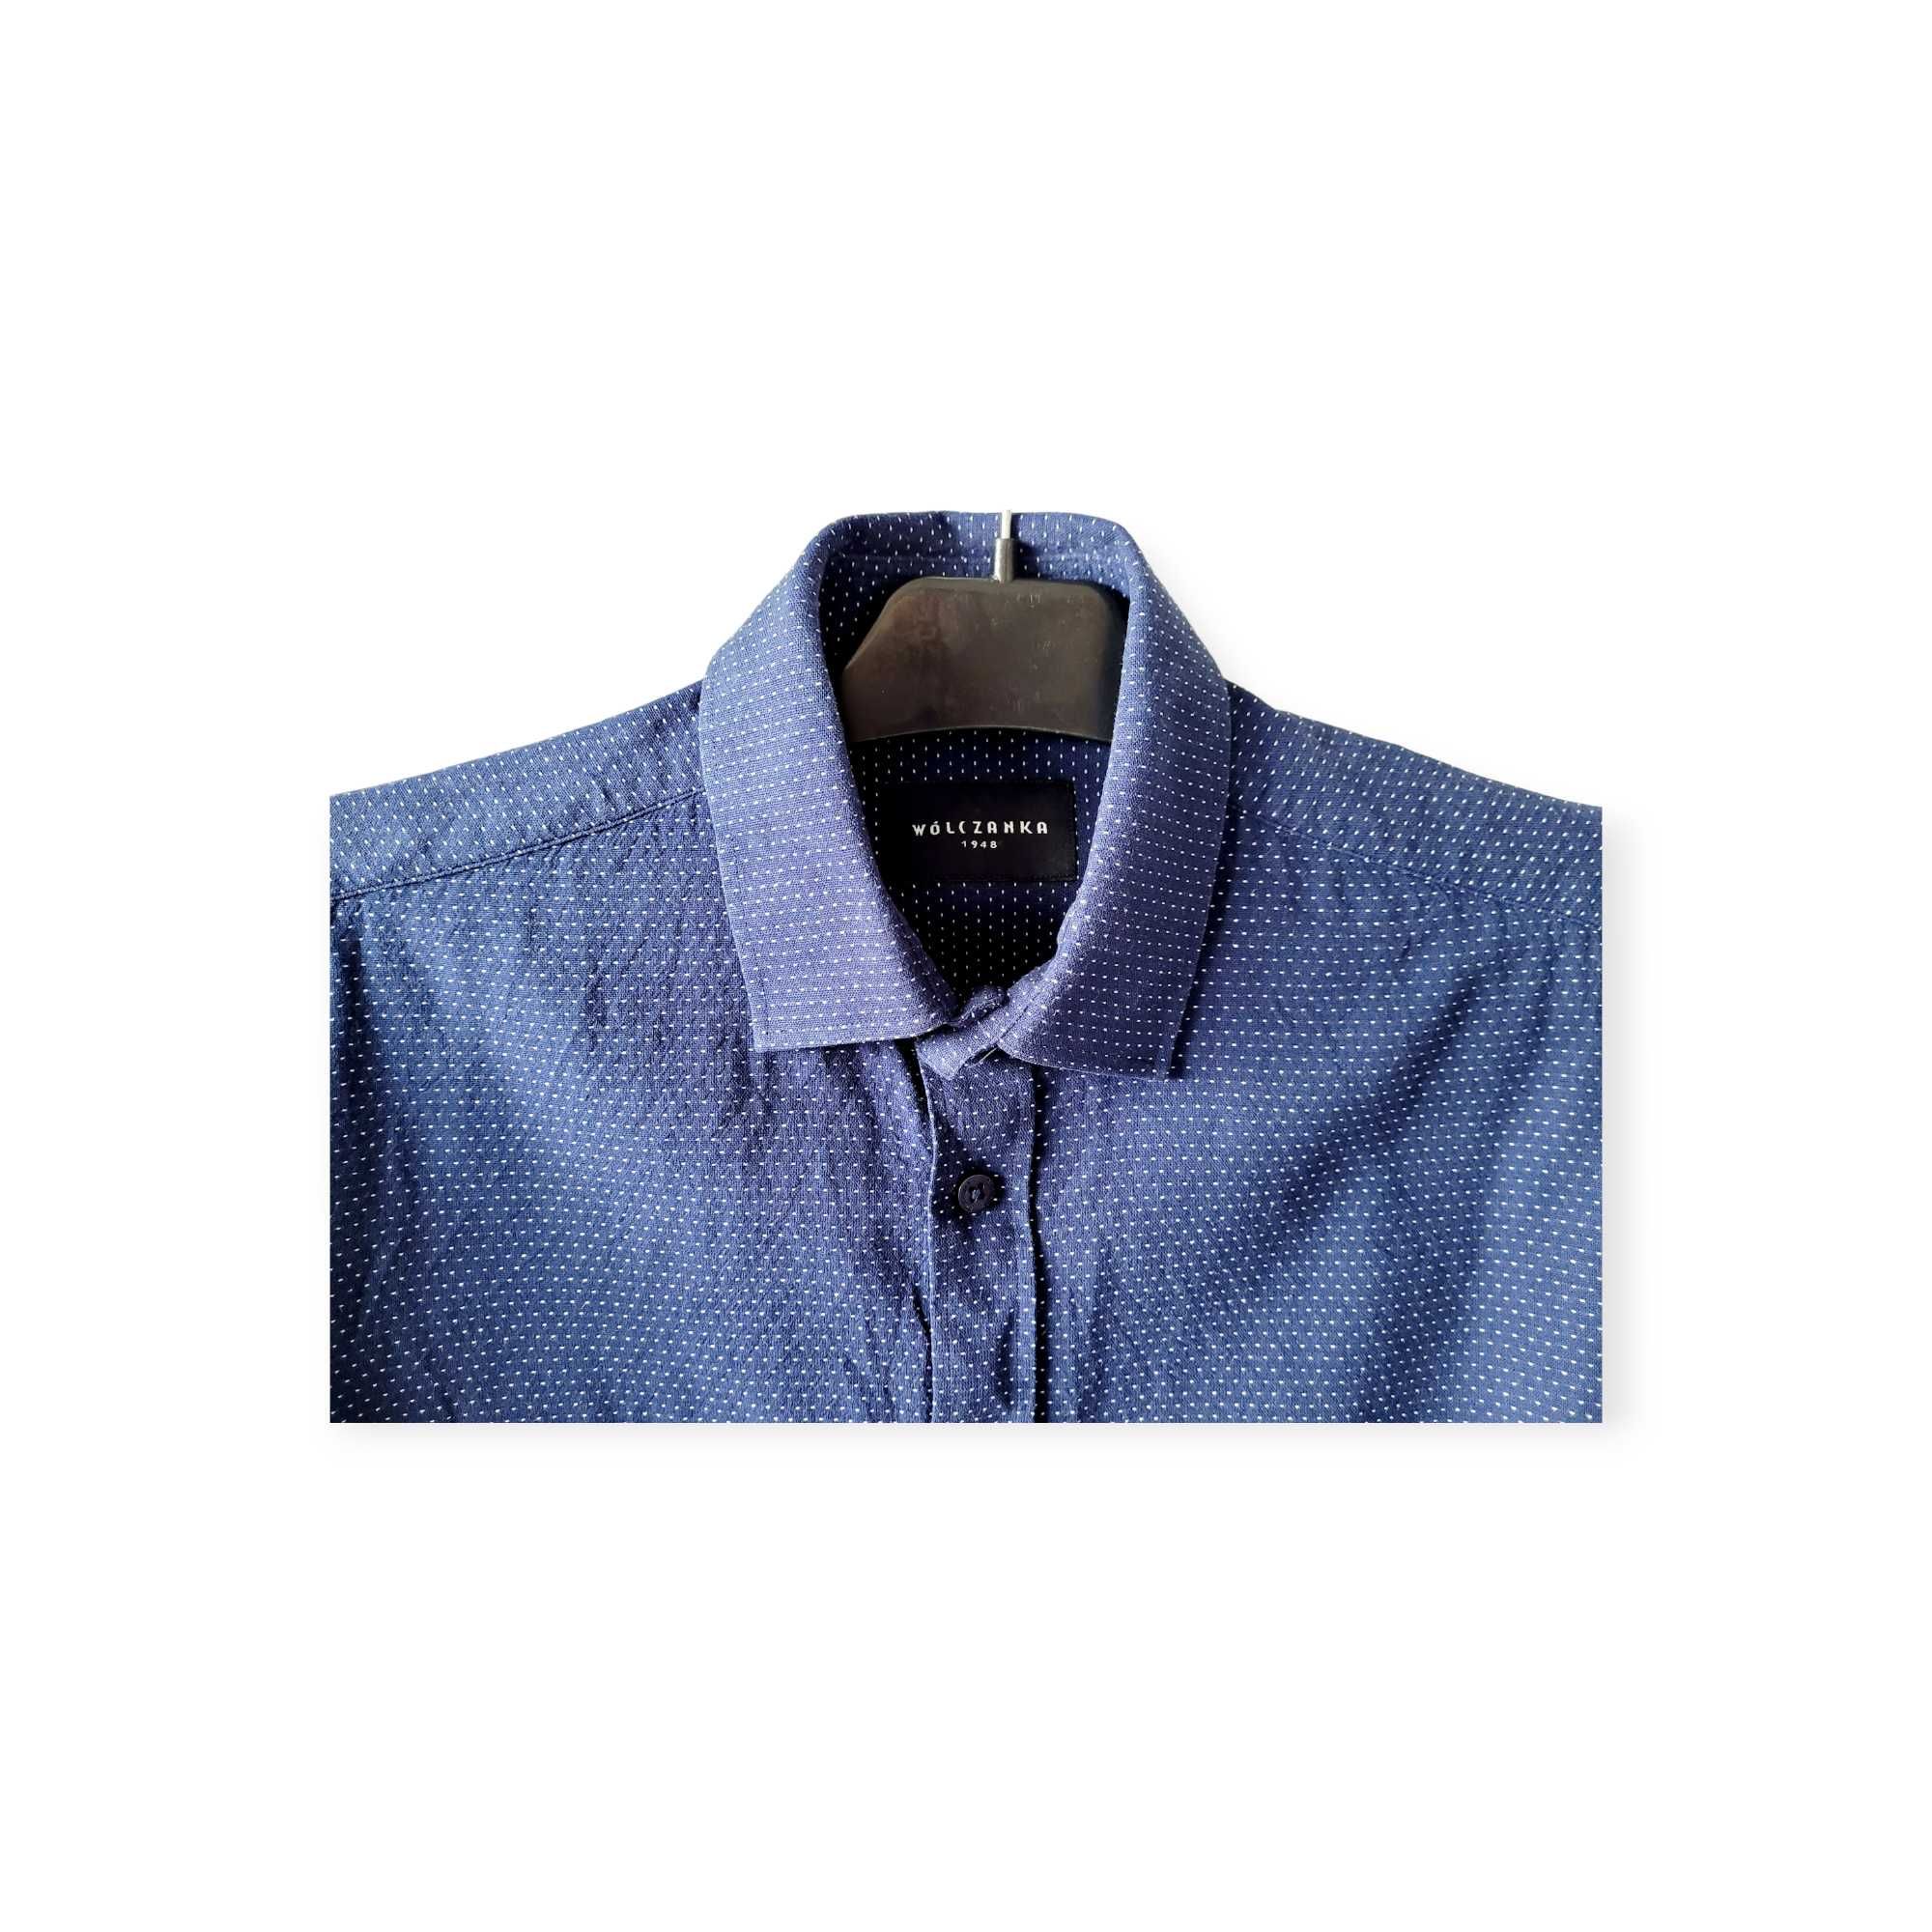 Granatowa koszula męska Wólczanka 40 L w kropki slim fit długi rękaw